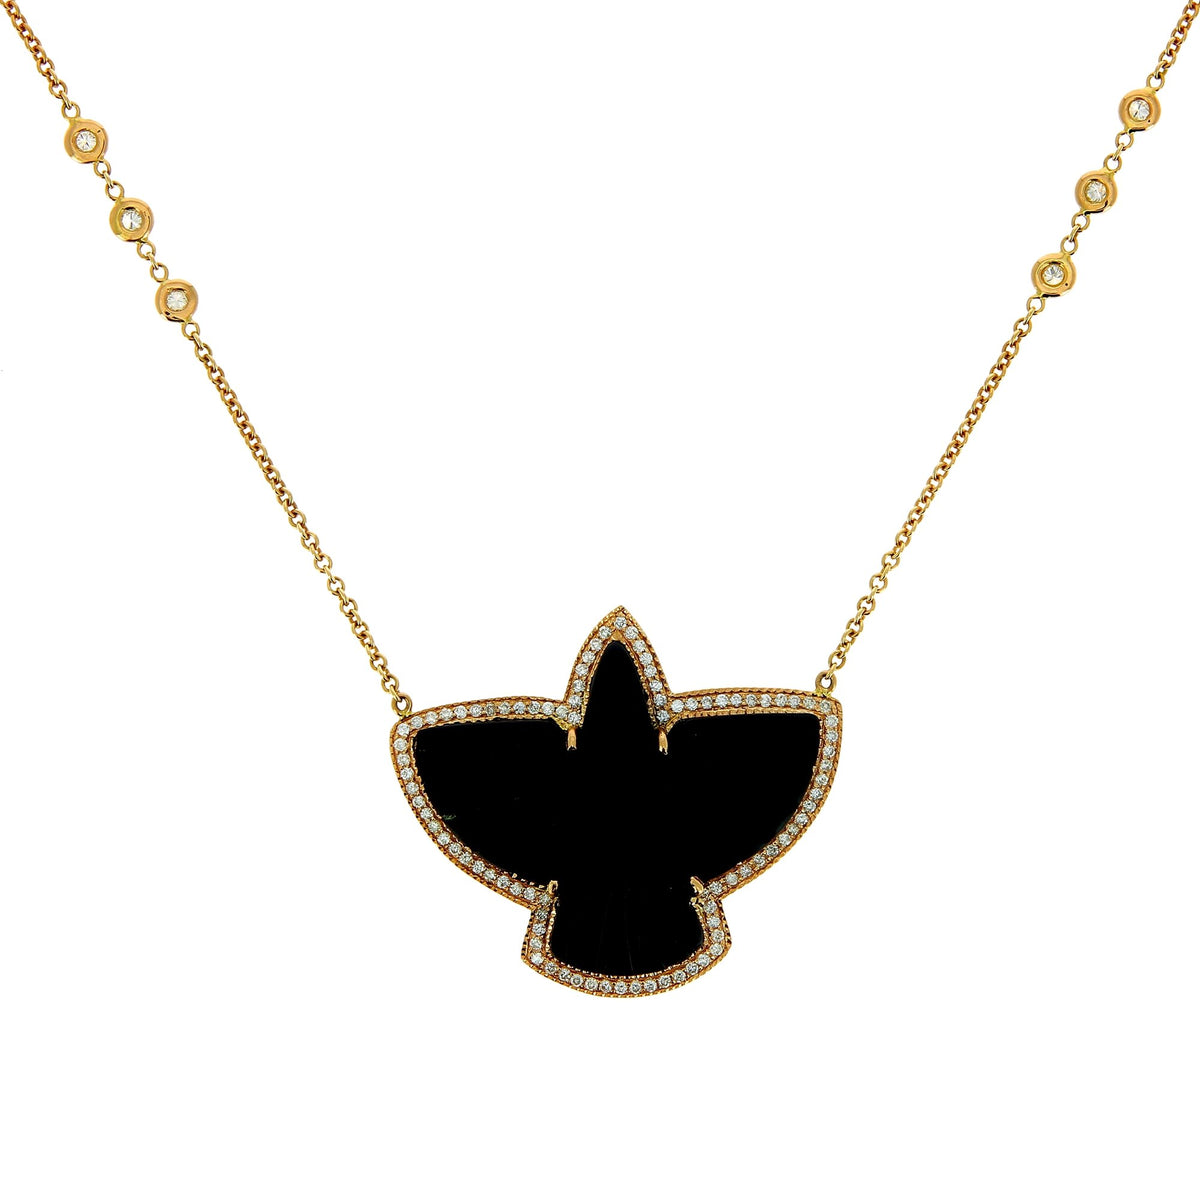 Onyx thunderbird necklace